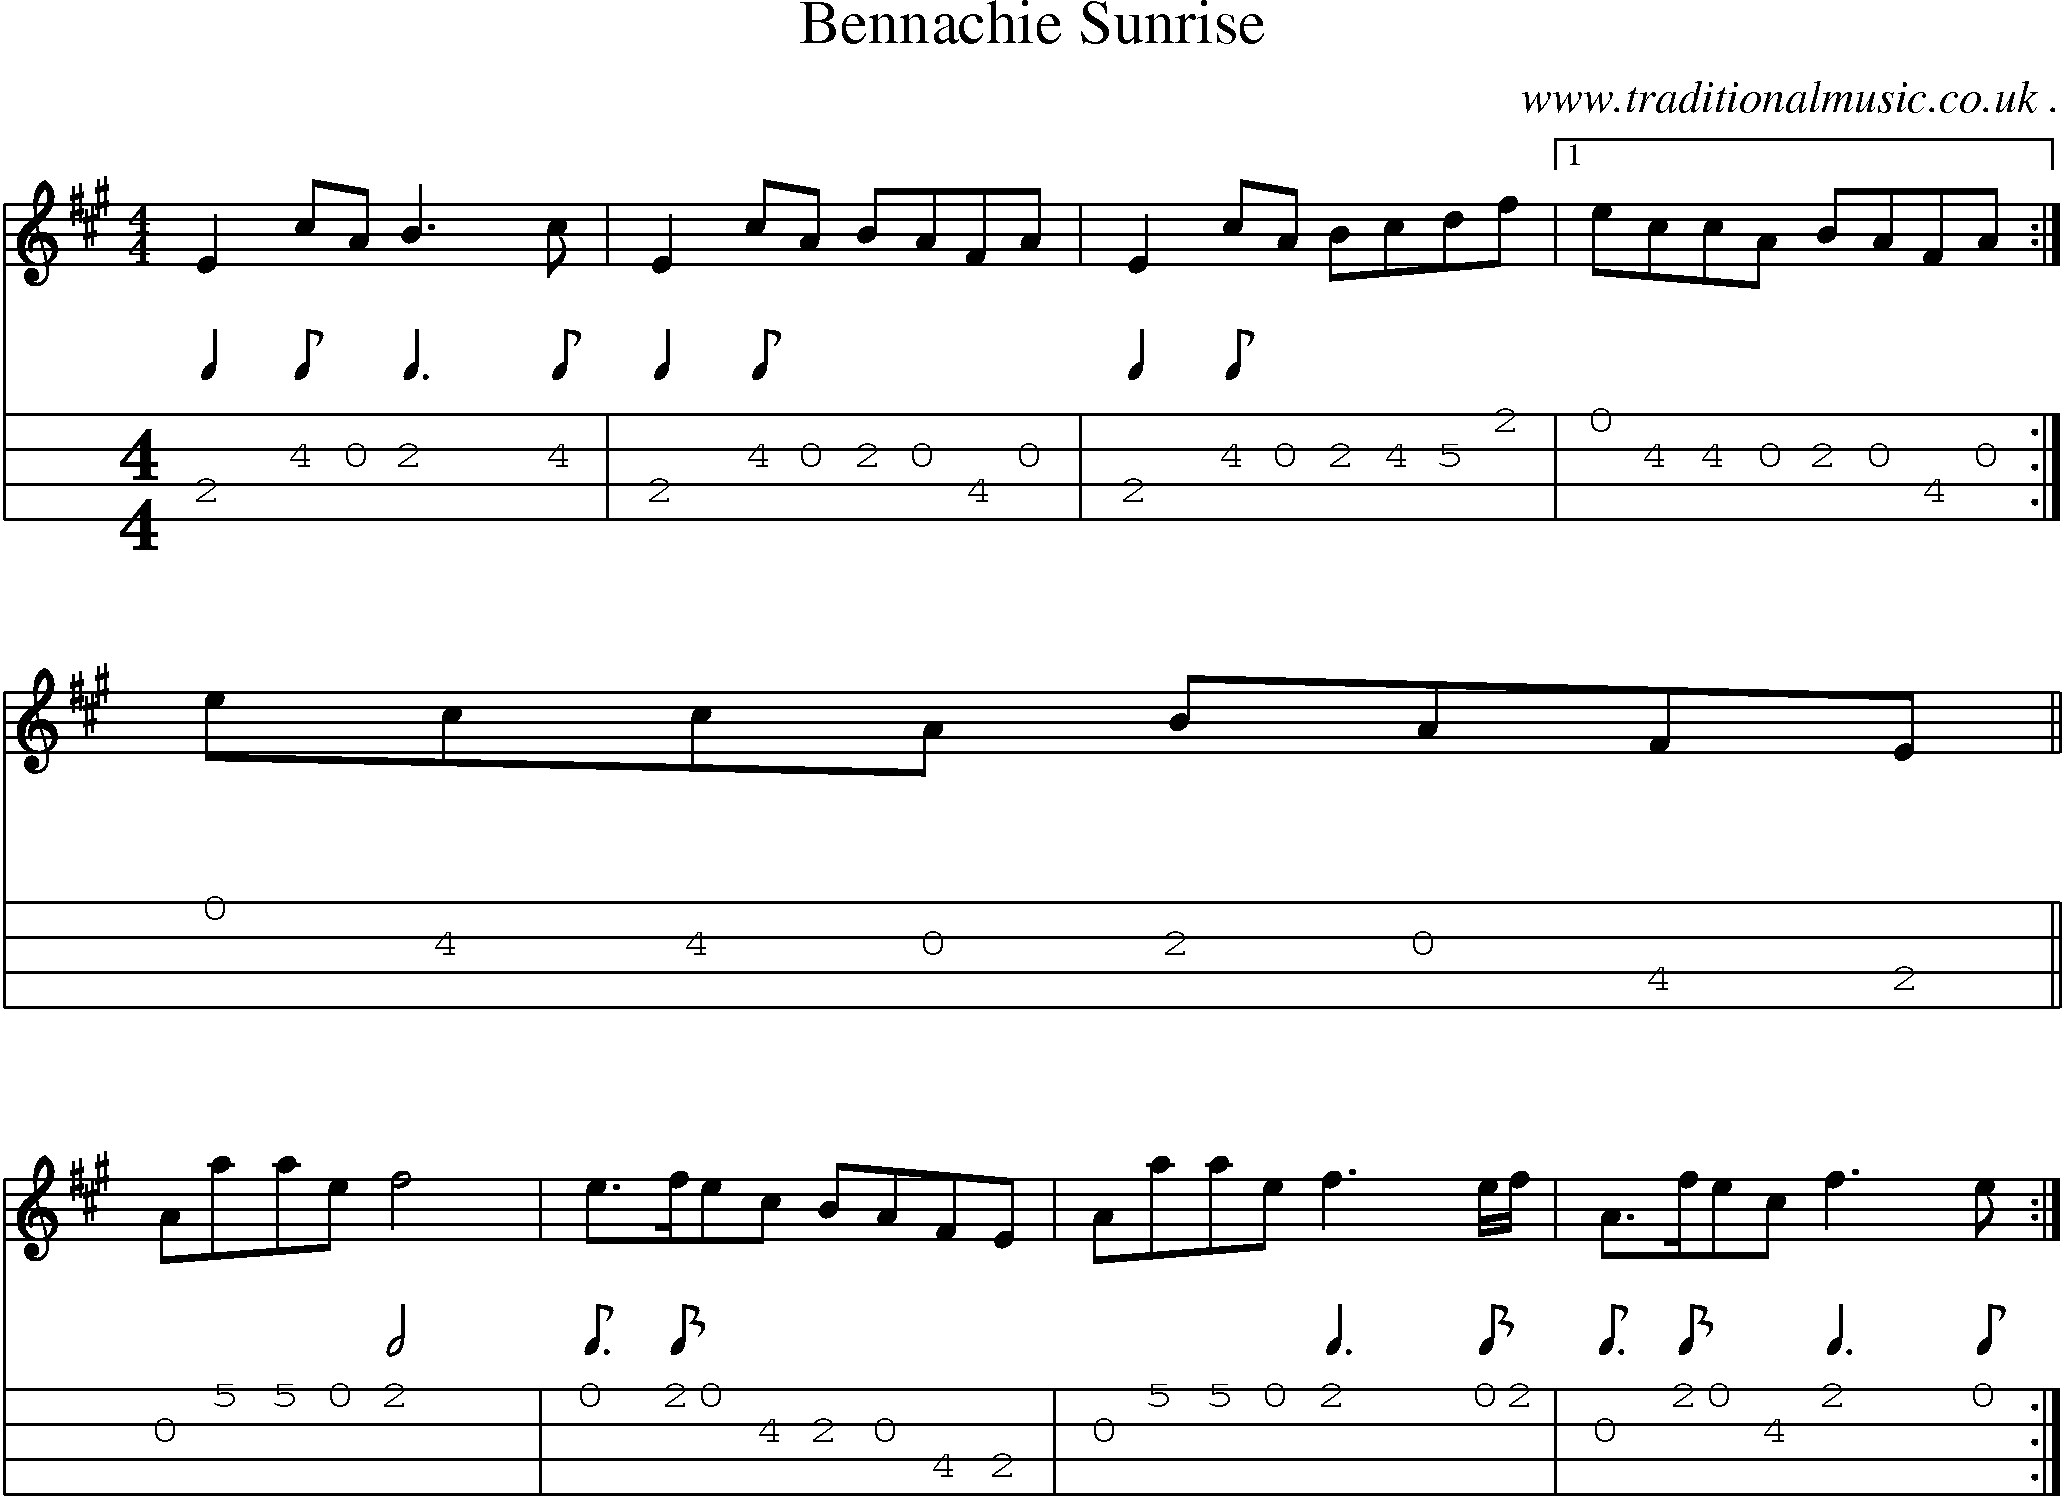 Sheet-music  score, Chords and Mandolin Tabs for Bennachie Sunrise